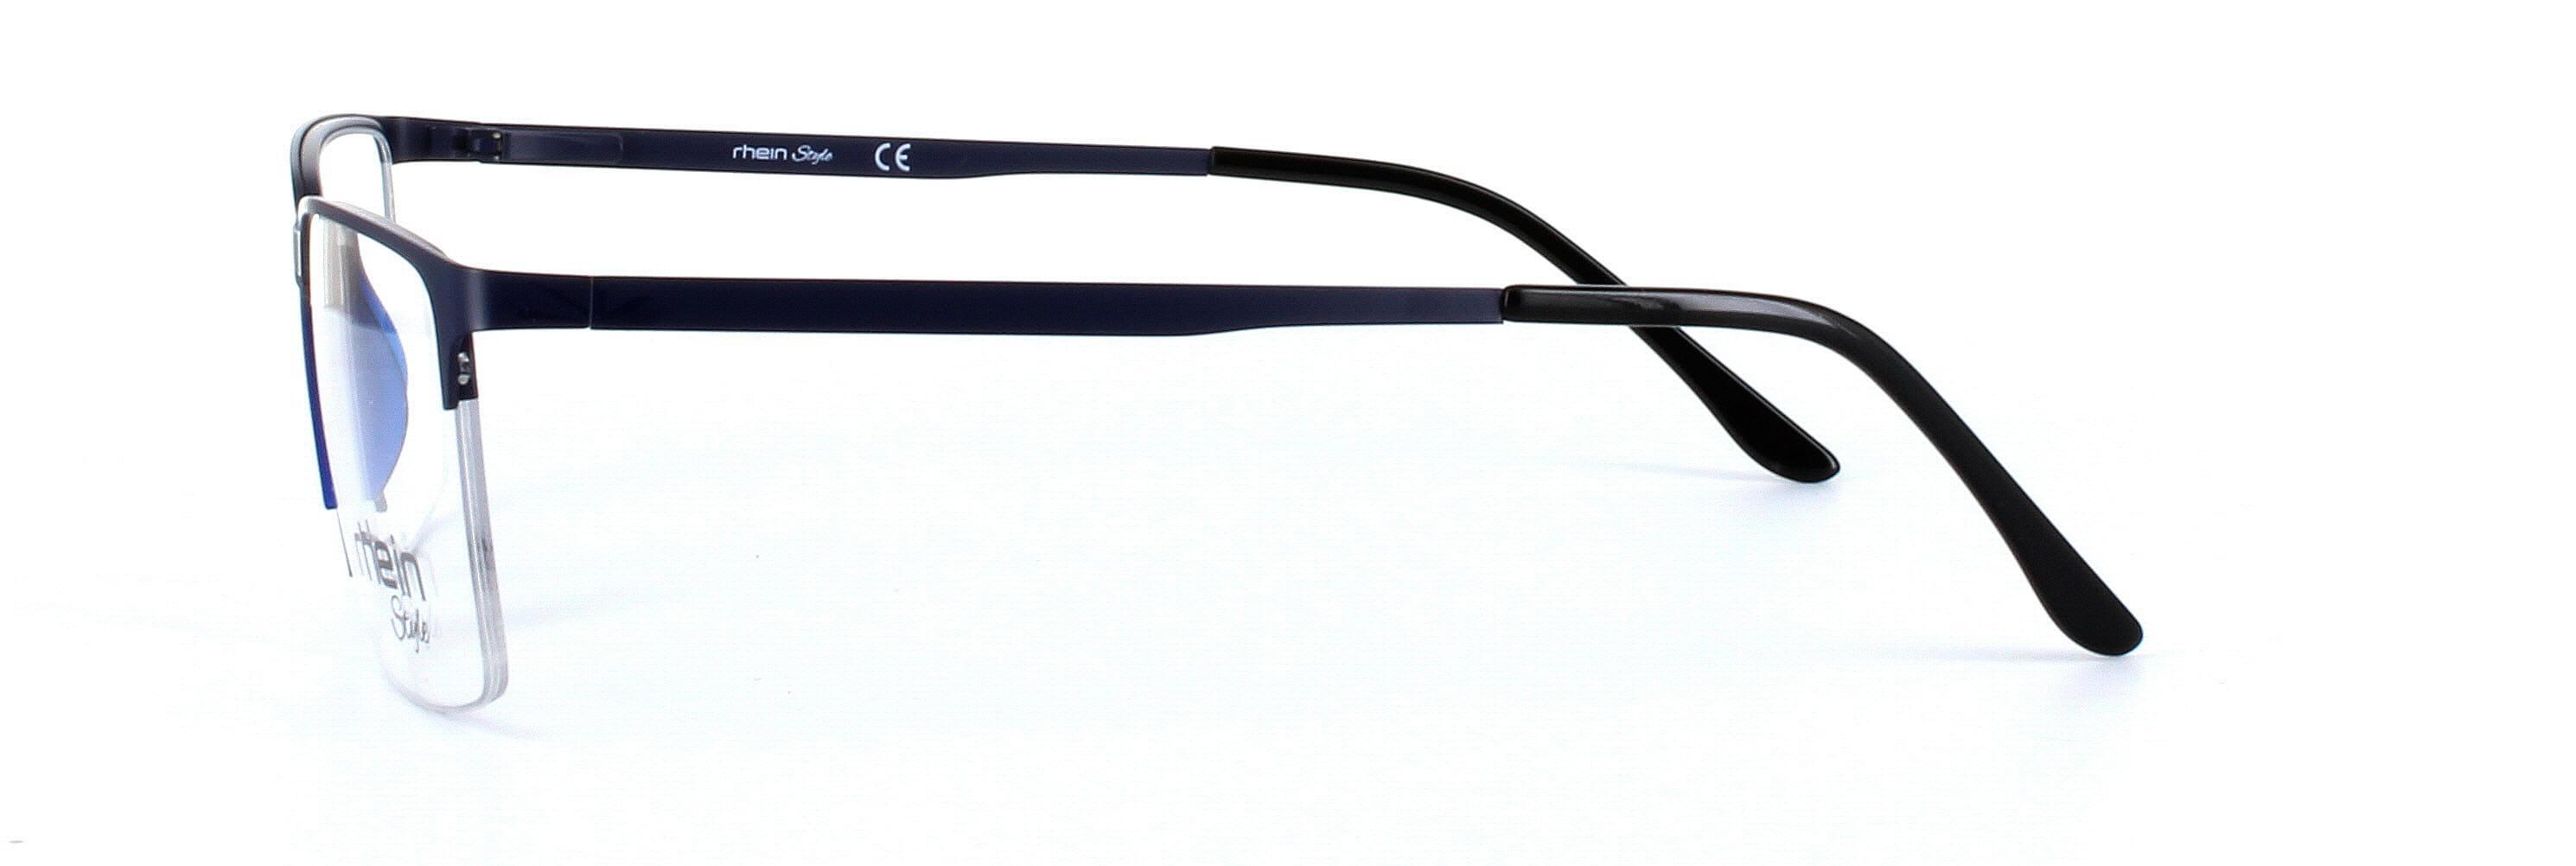 Hamilton Blue Semi Rimless Rectangular Metal Glasses - Image View 2